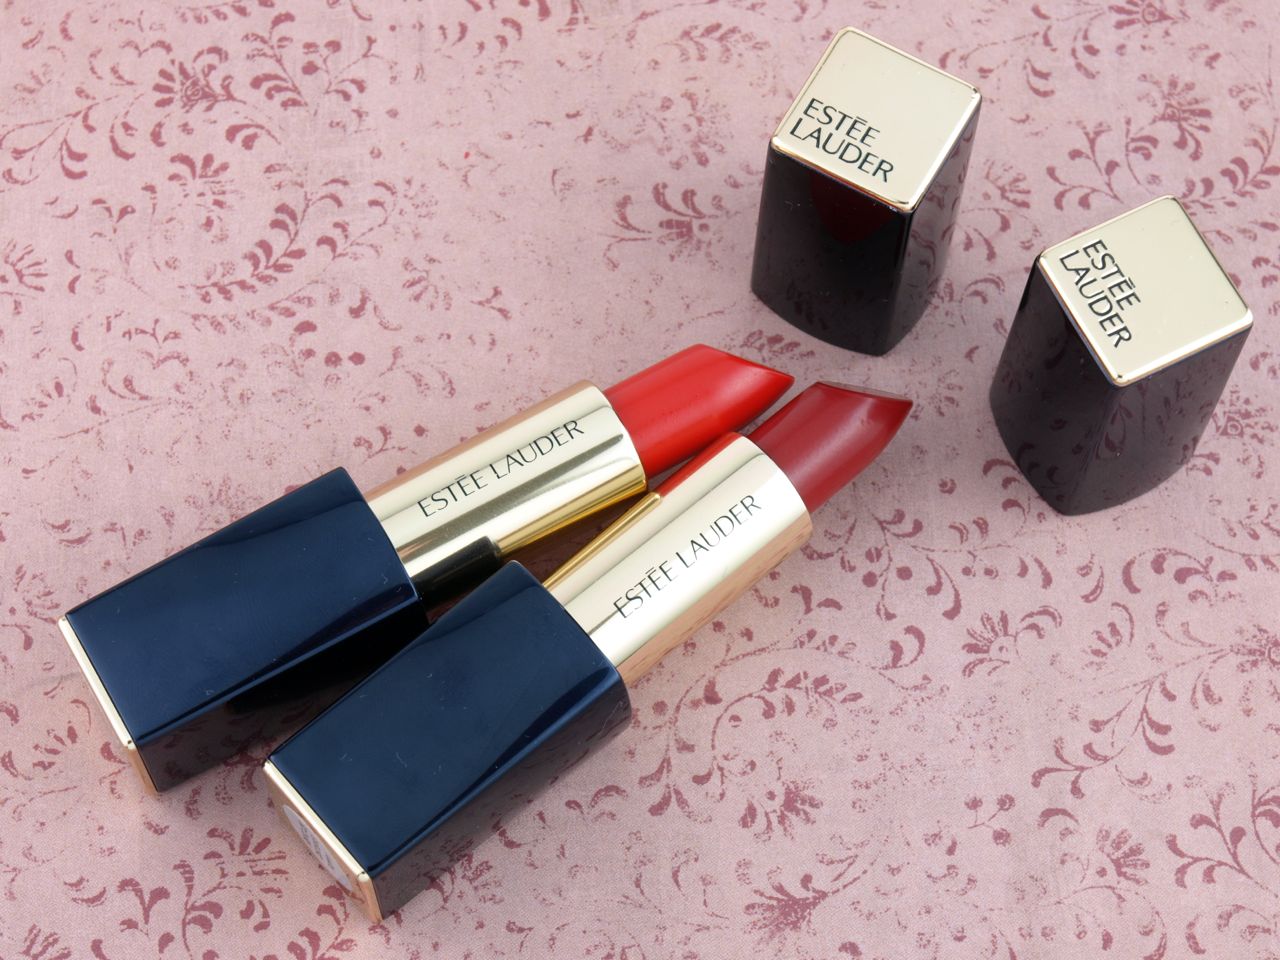 Estee Lauder Pure Color Envy Matte Lipsticks in "Decisive Poppy" & "Volatile": Review and Swatches